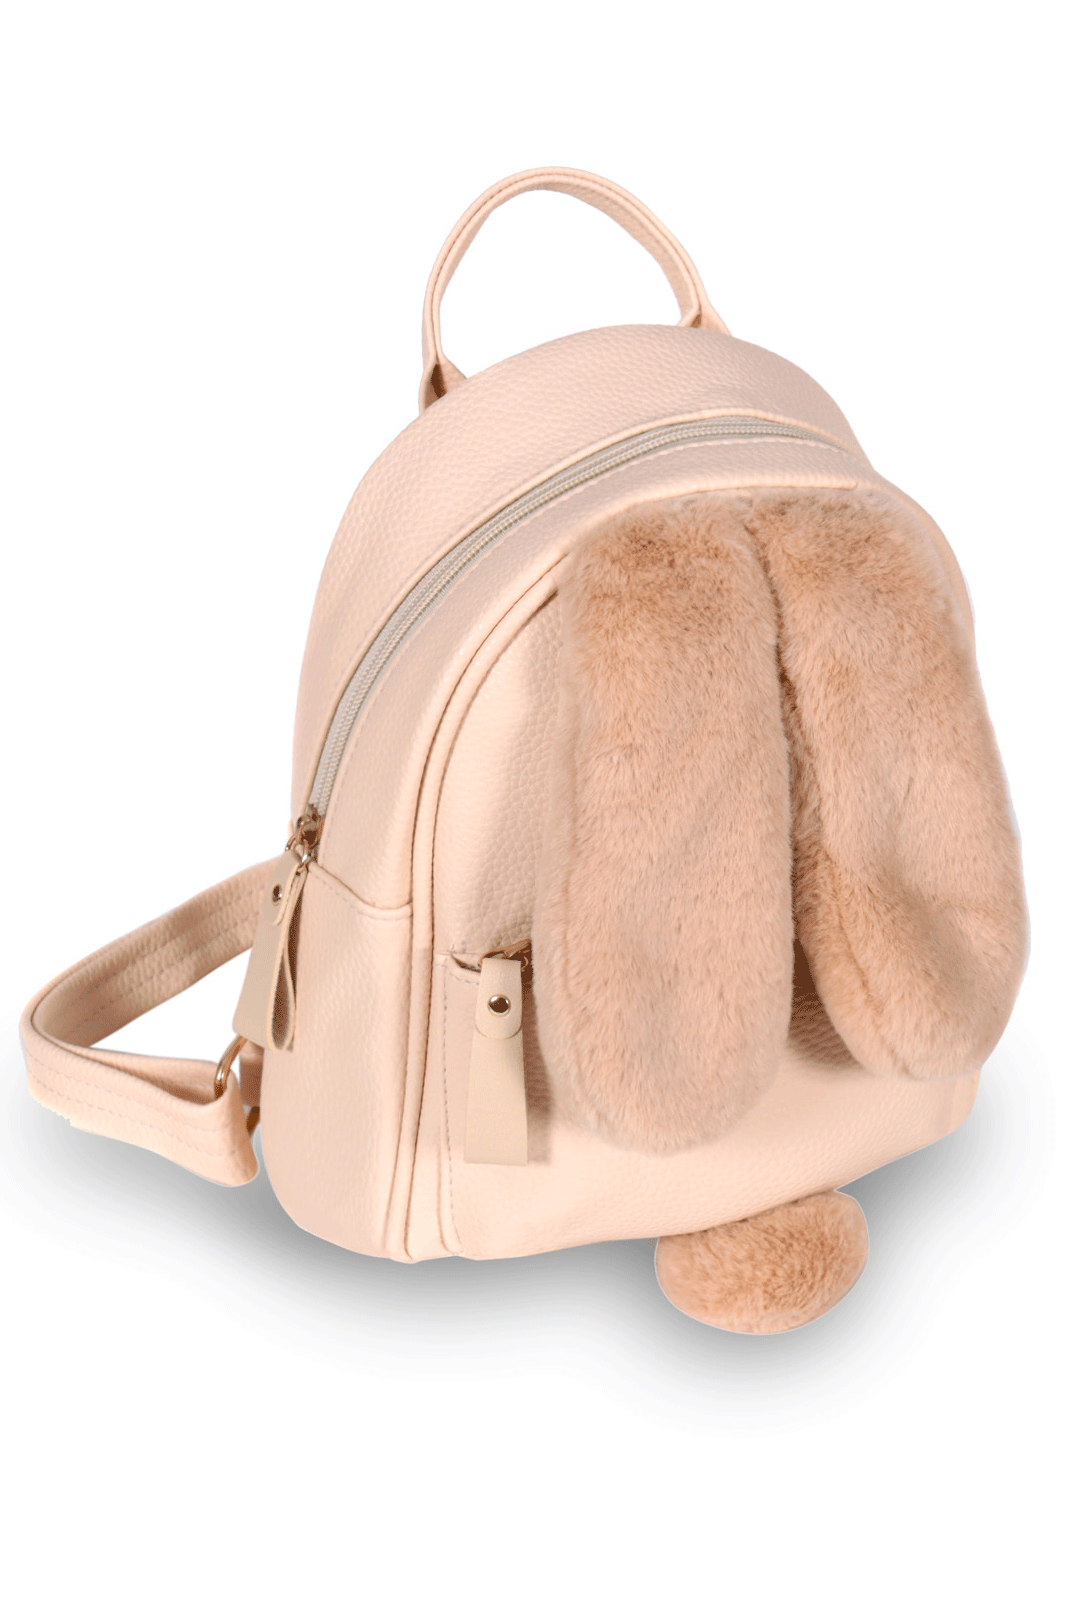 Мягкий рюкзак для девочки Длинные ушки 24 см 058D-1514D ТМ Коробейники Familiy